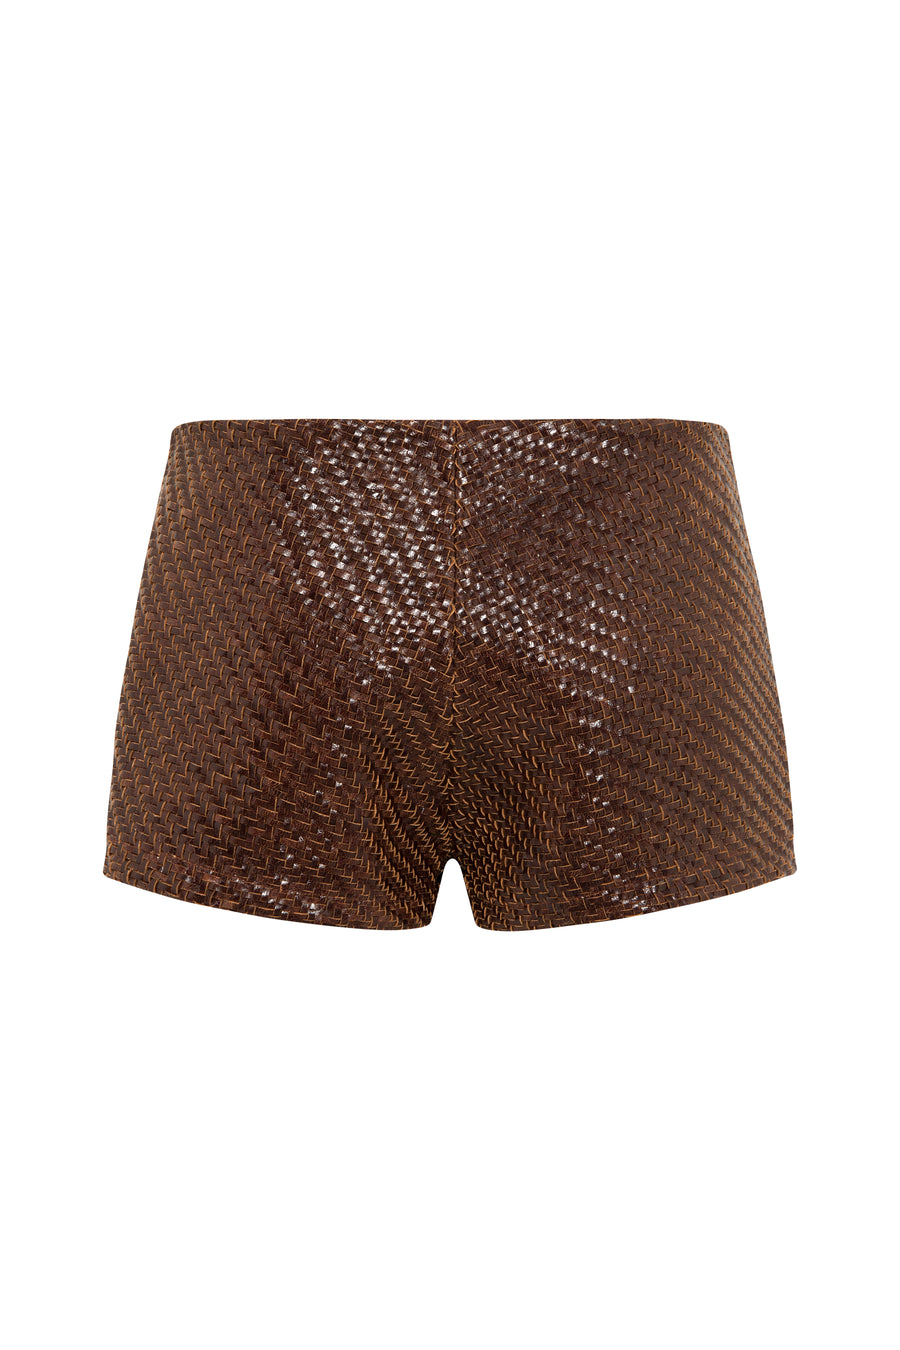 HUJI - Woven leather mini shorts